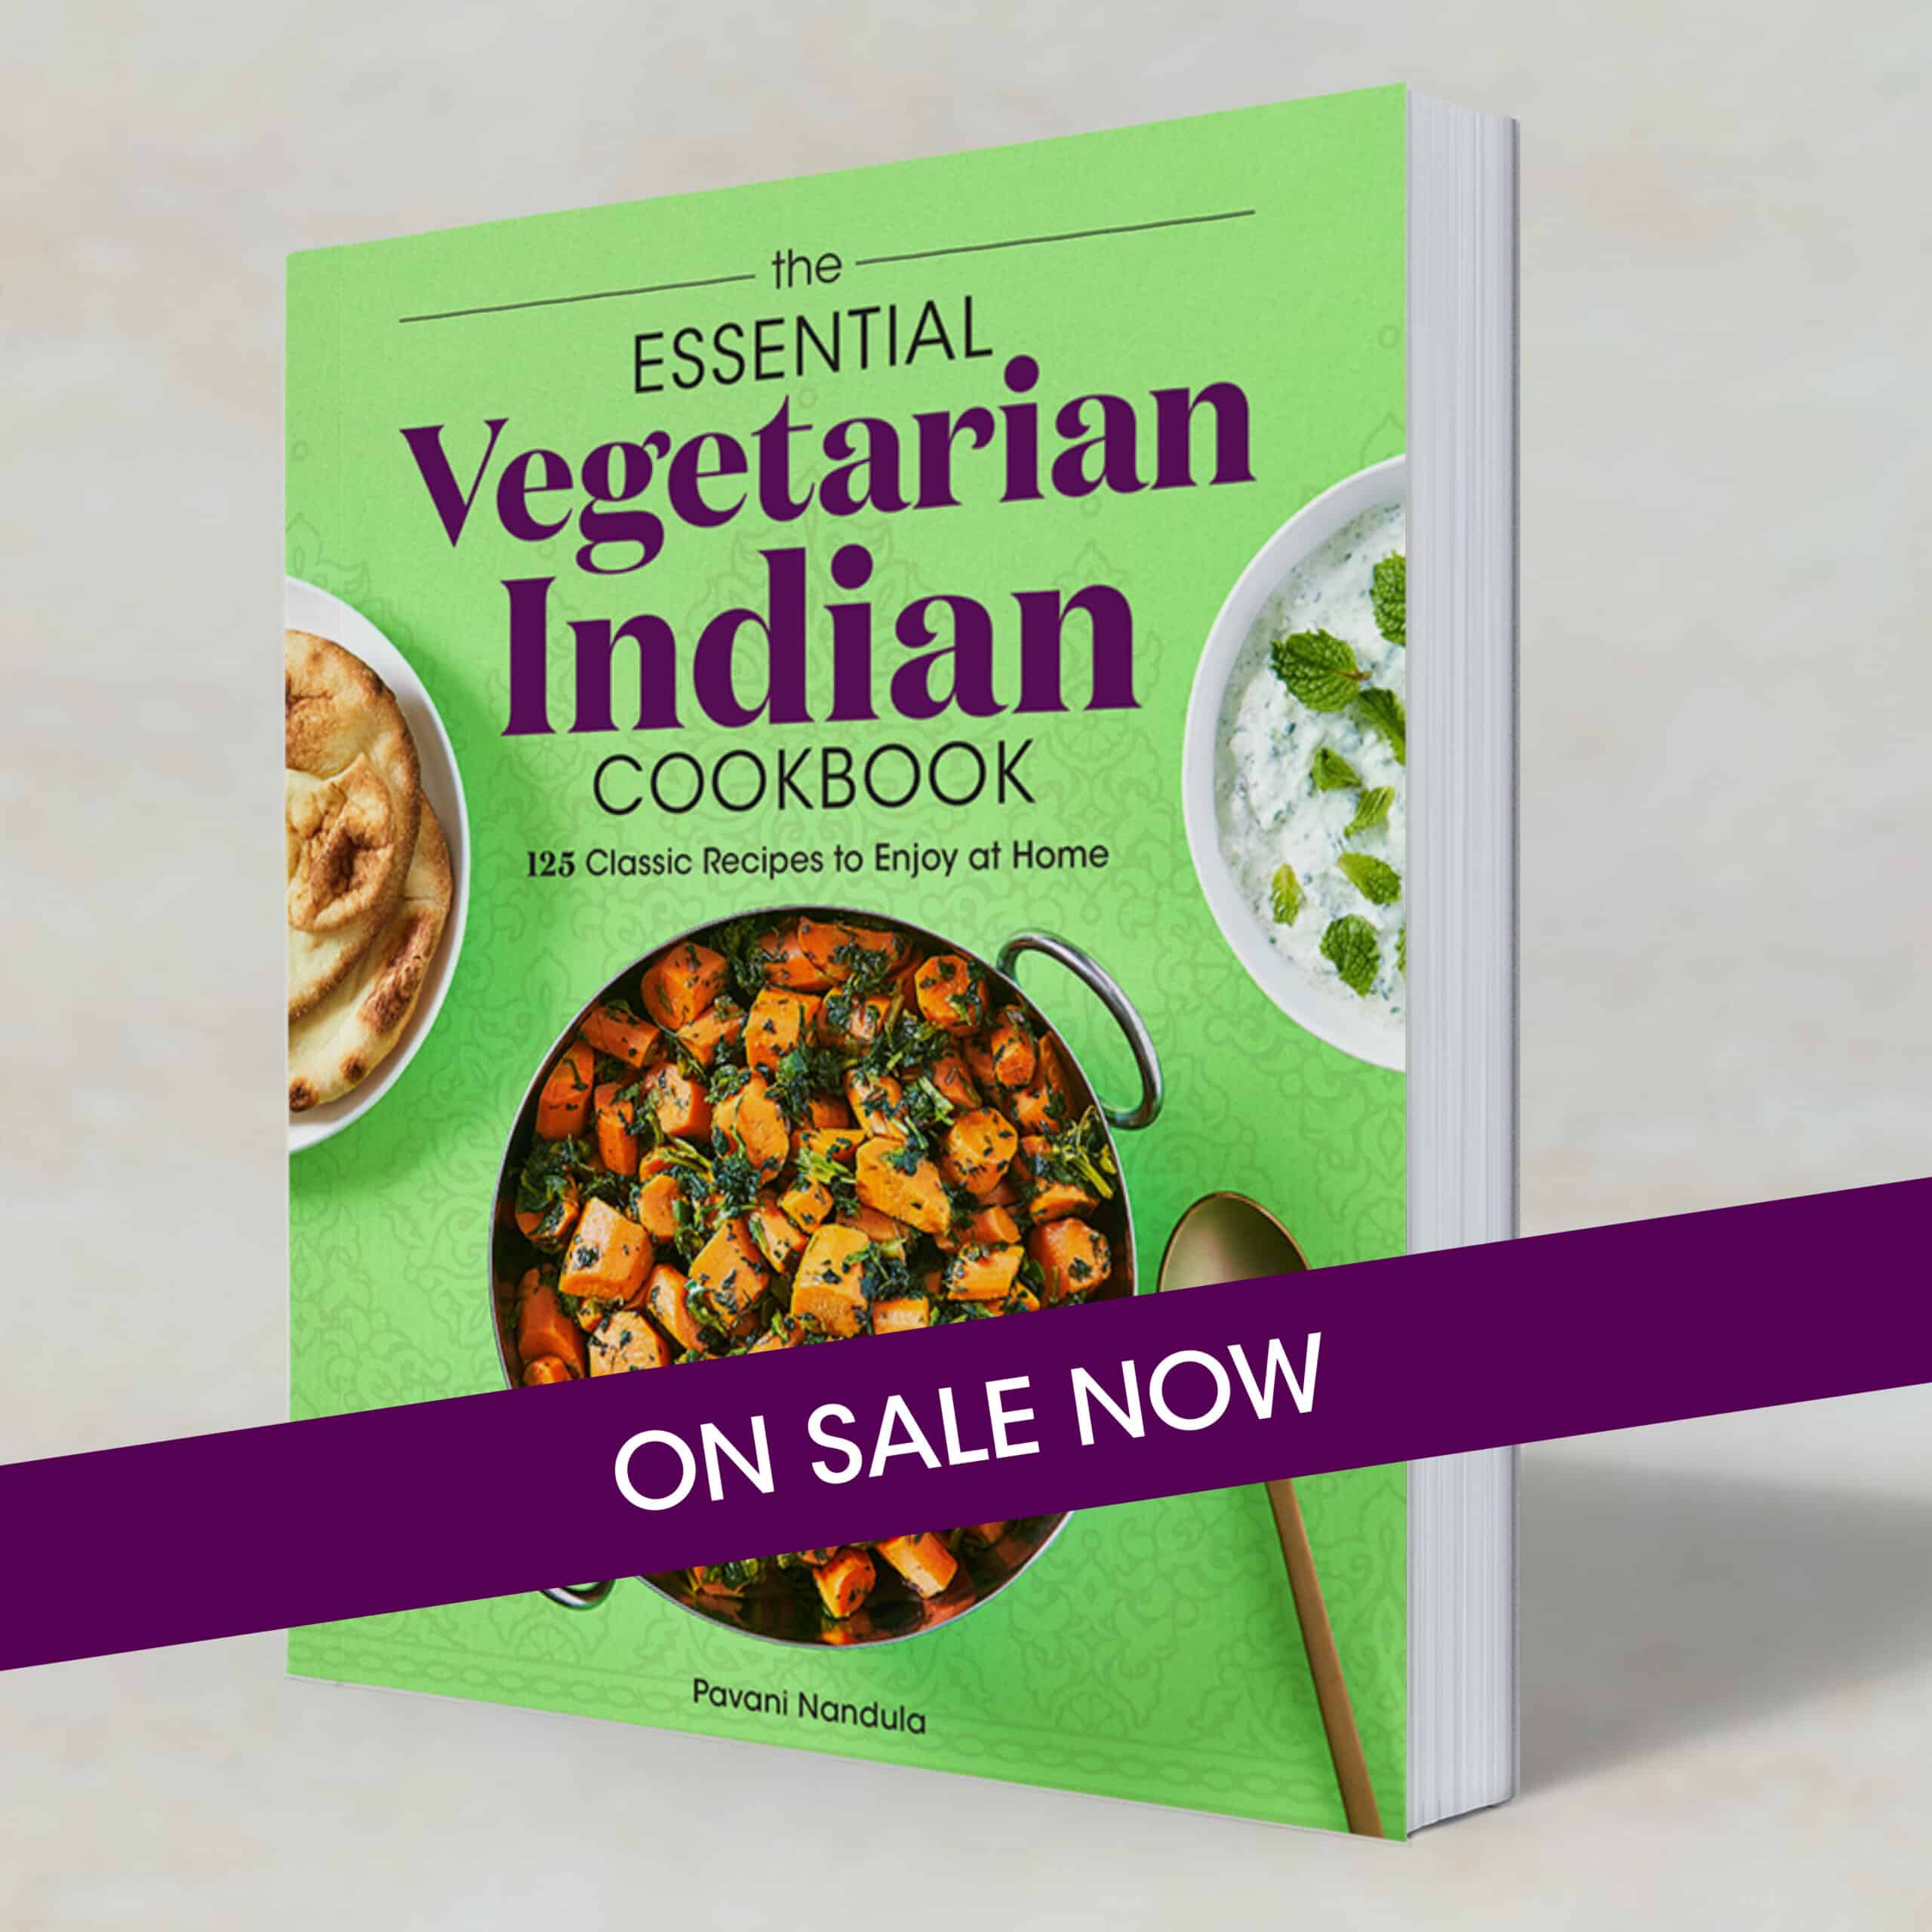 The Essential Vegetarian Indian Cookbook.